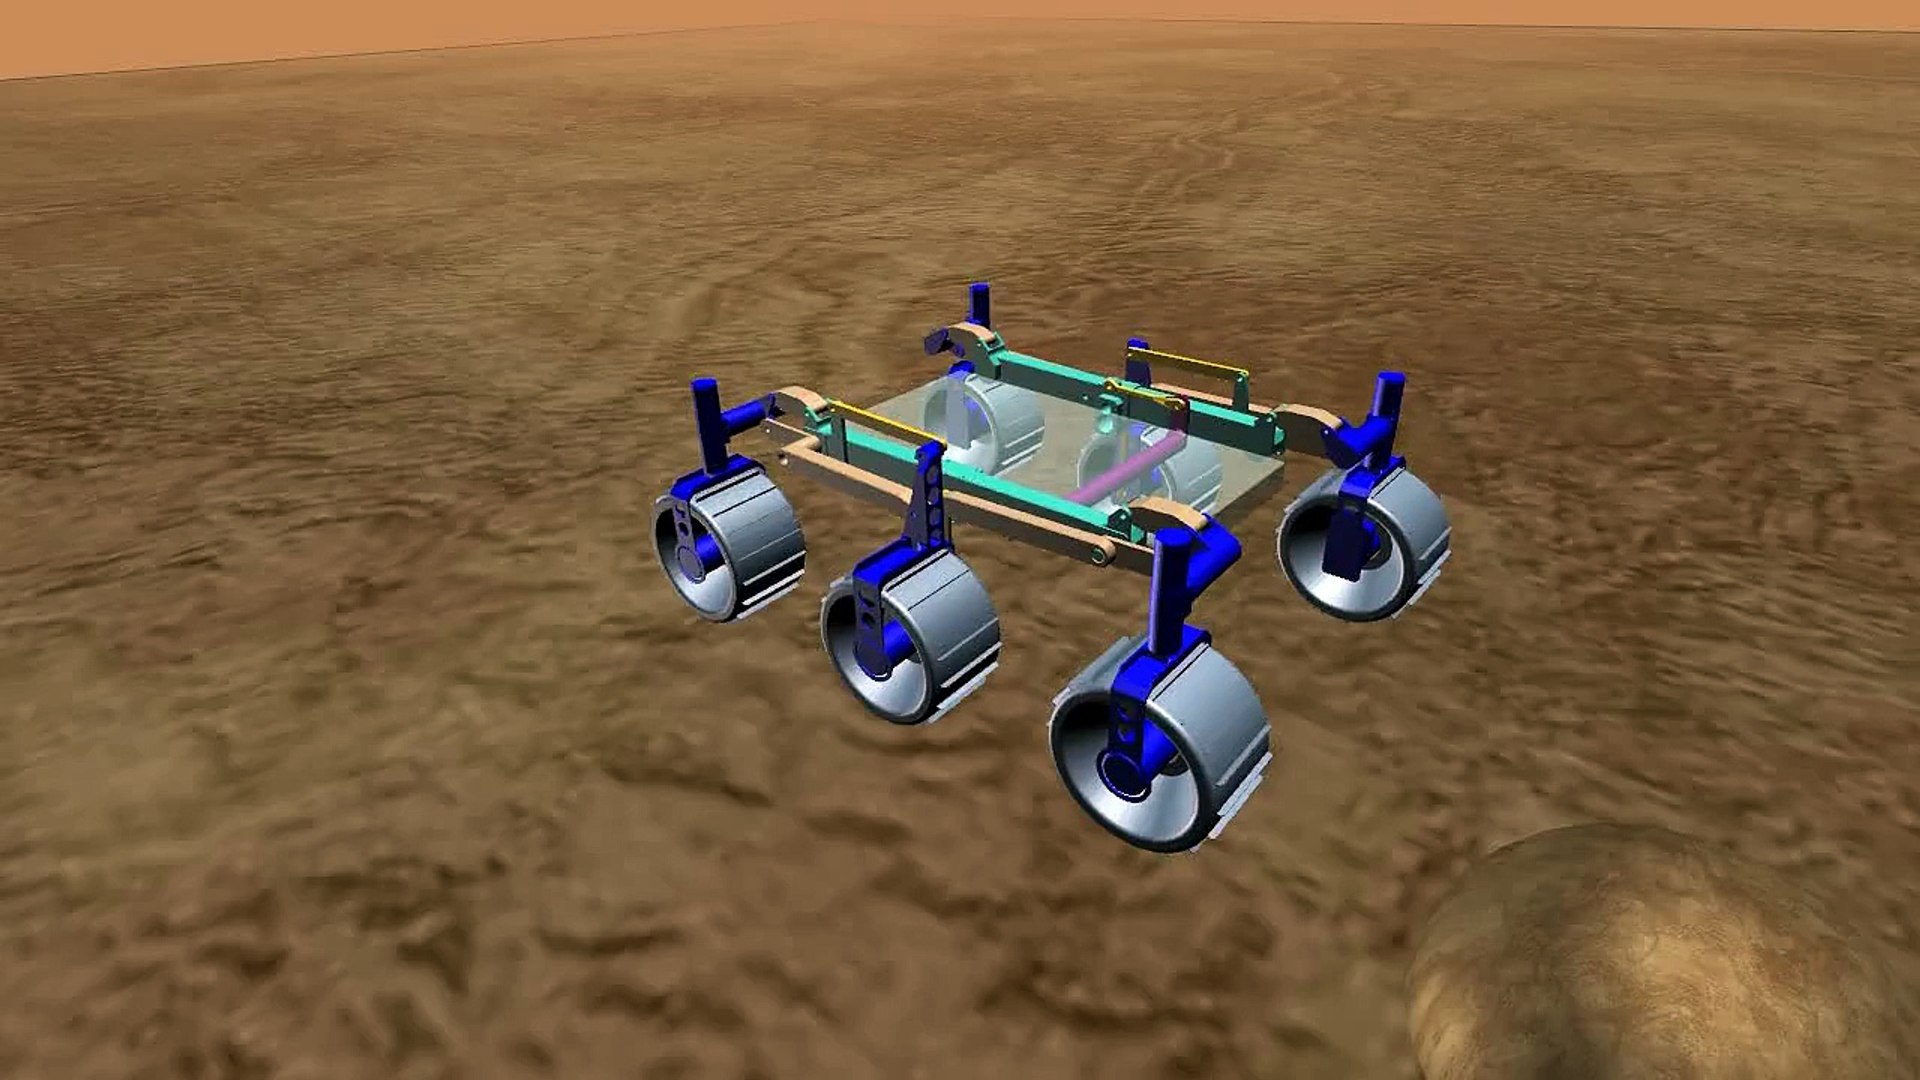 Mars Rover simulation